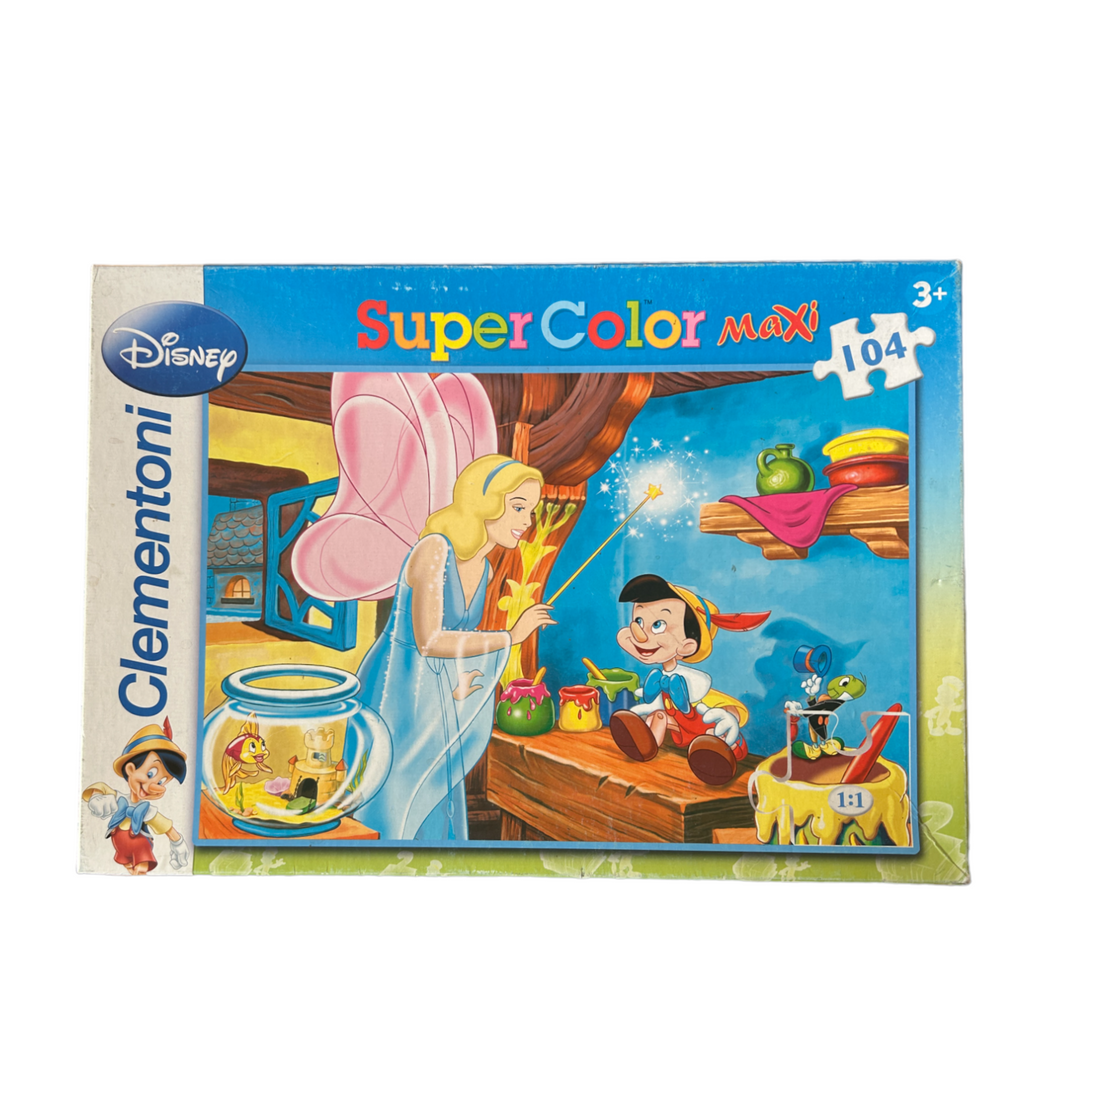 Puzzle Disney - Super Color maxi -104 pièces